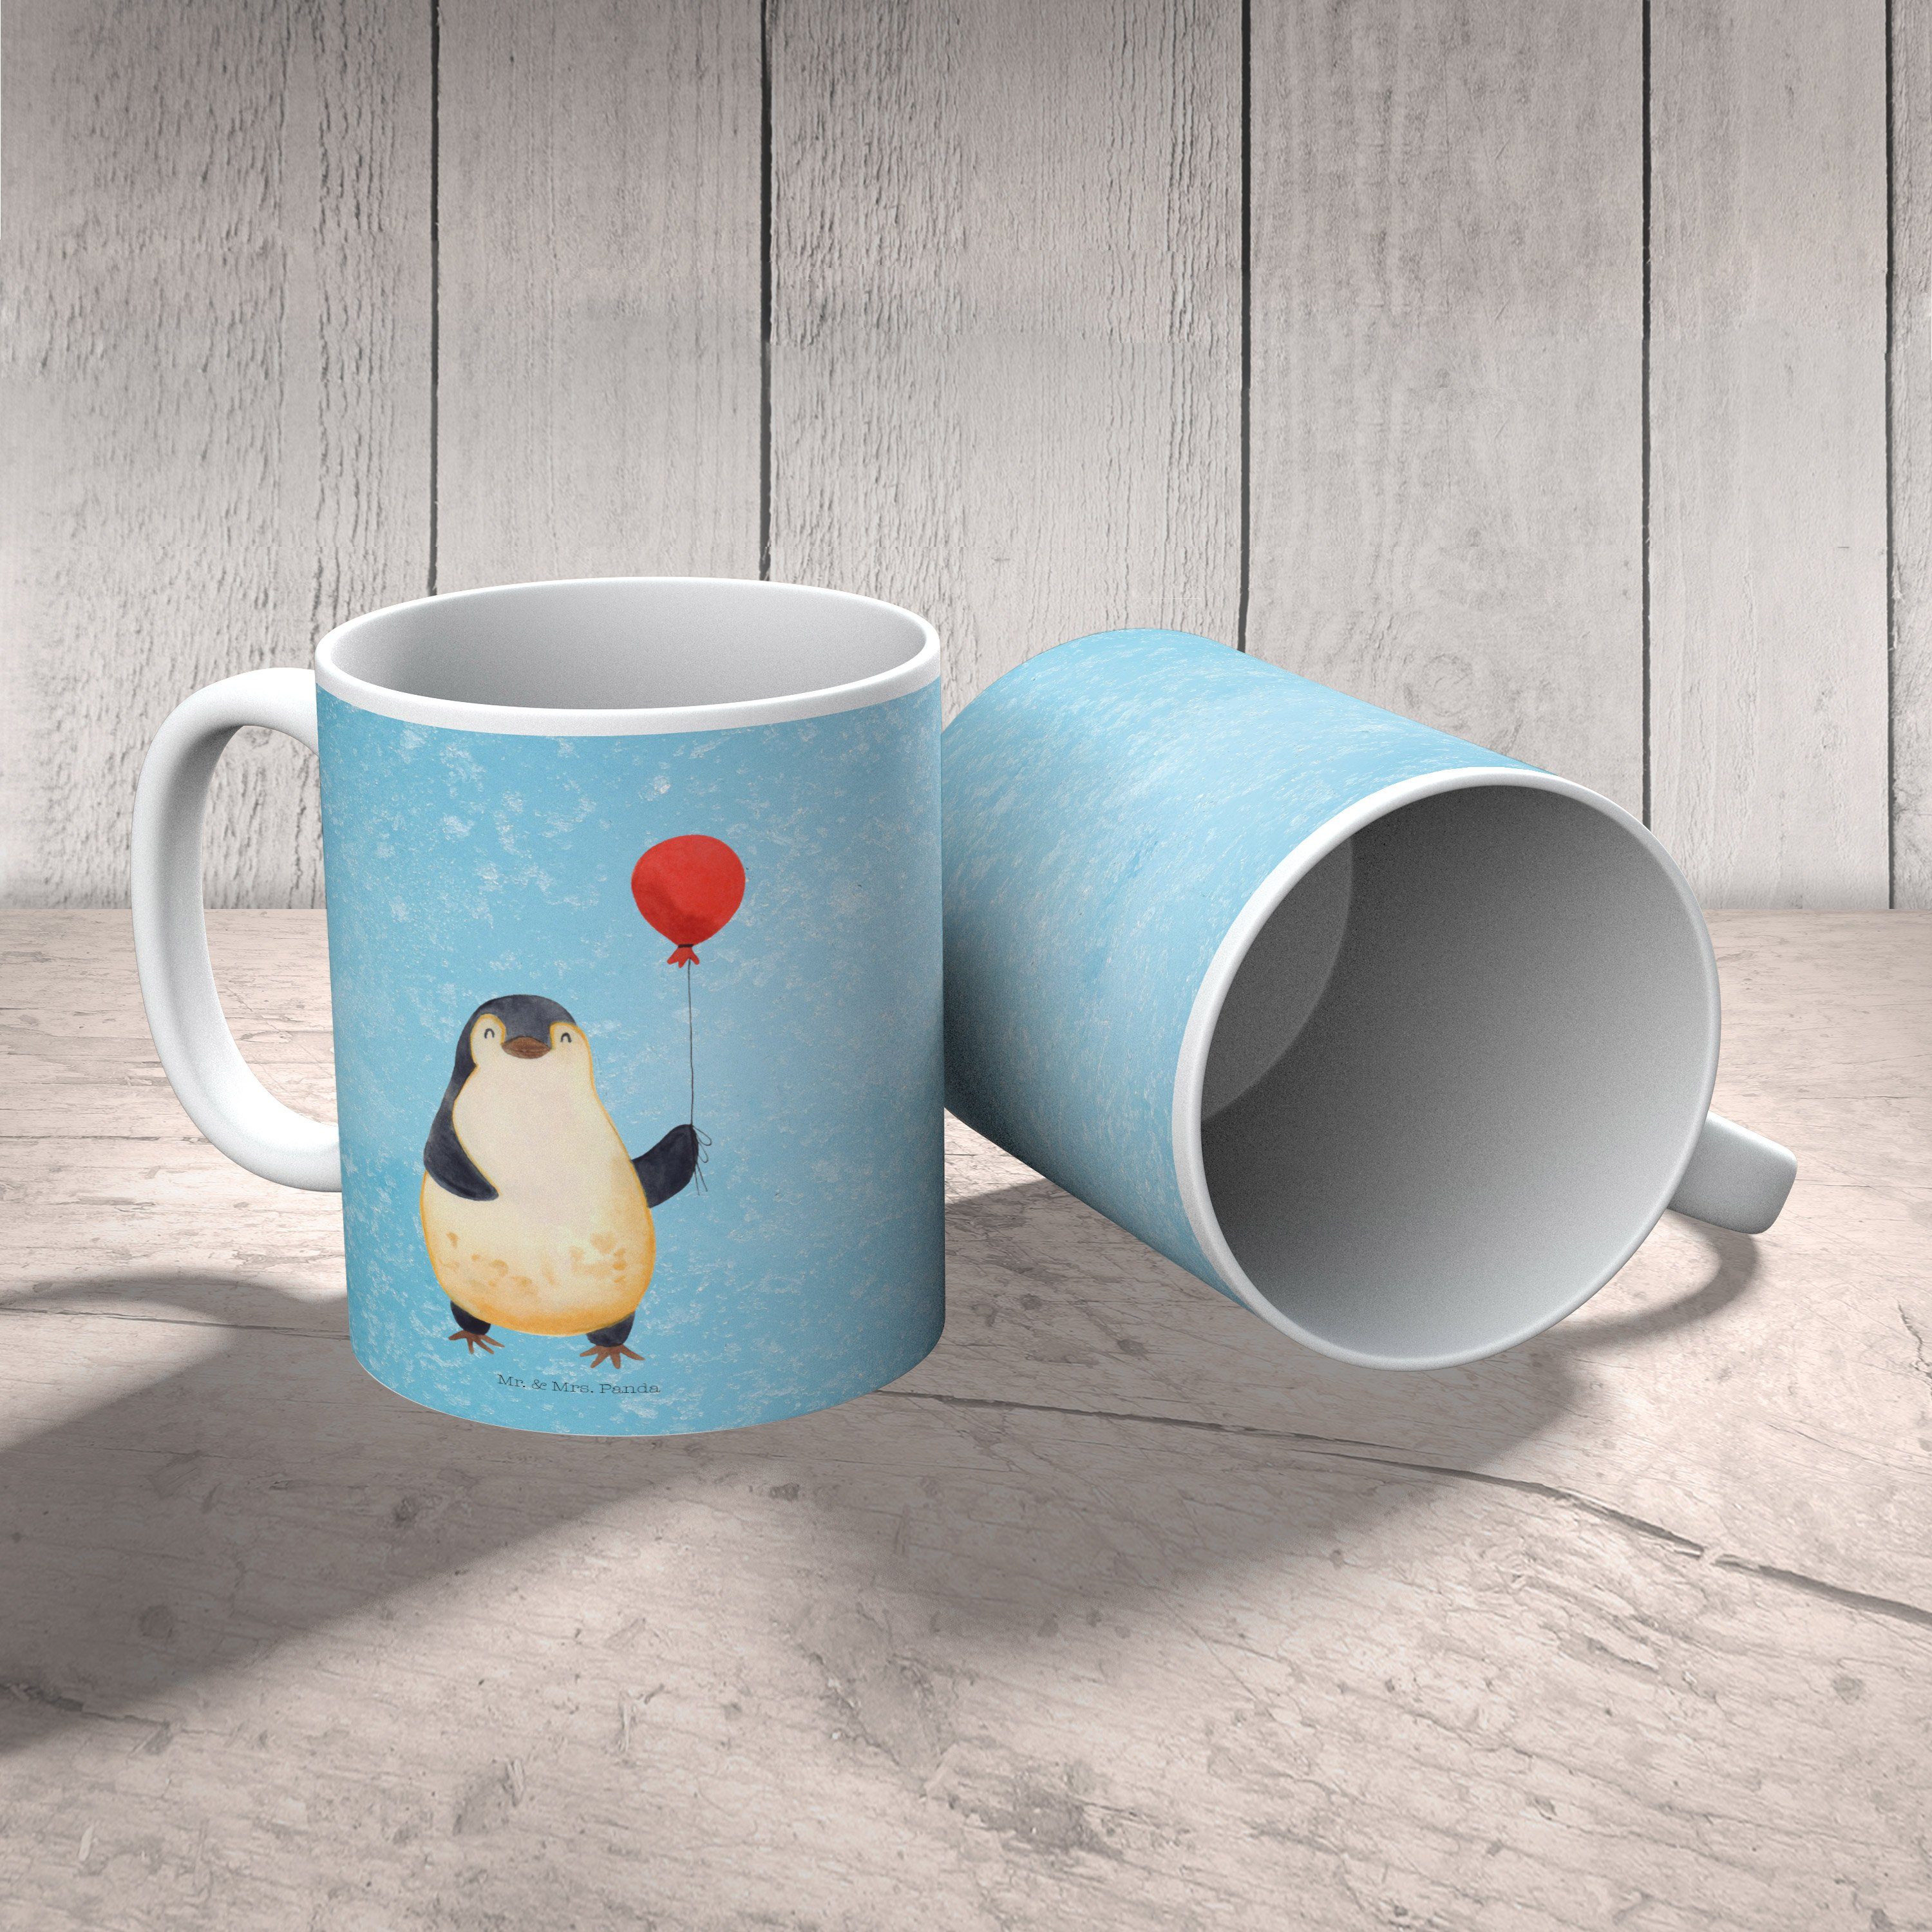 Keramik - Mrs. - Luftballon Tasse, Pinguin Büro Eisblau Tasse, Panda Geschenk, & Mr. Geschenk Tasse